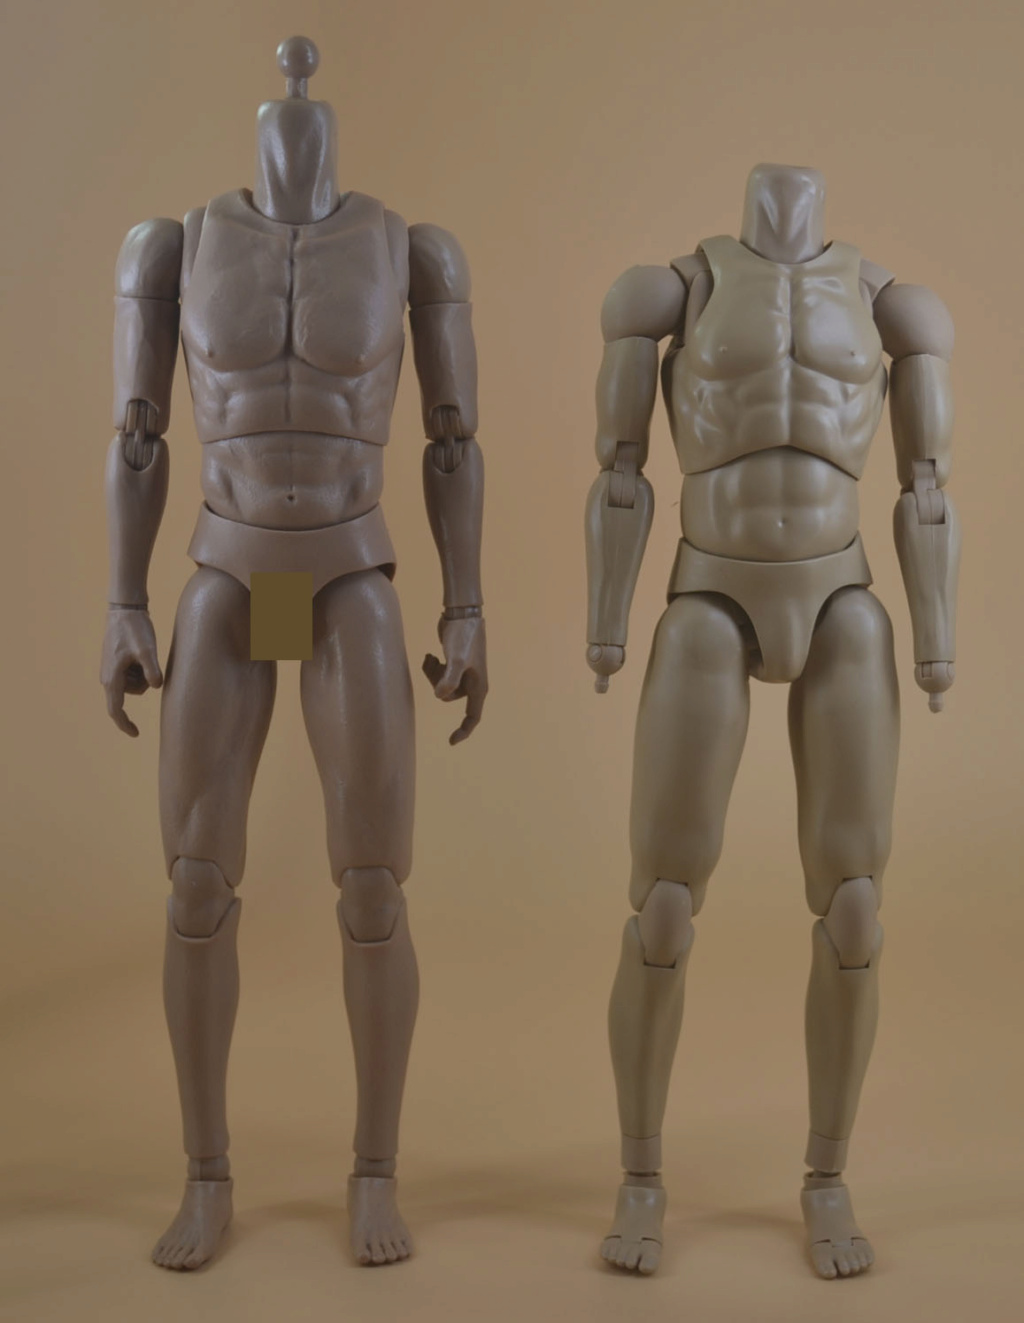 Body - NEW PRODUCT: COOMODEL: 1/6 MB001 standard male body, MB002 tall male body, MB003 muscle male body, MB004 tall muscle body _dsc3737